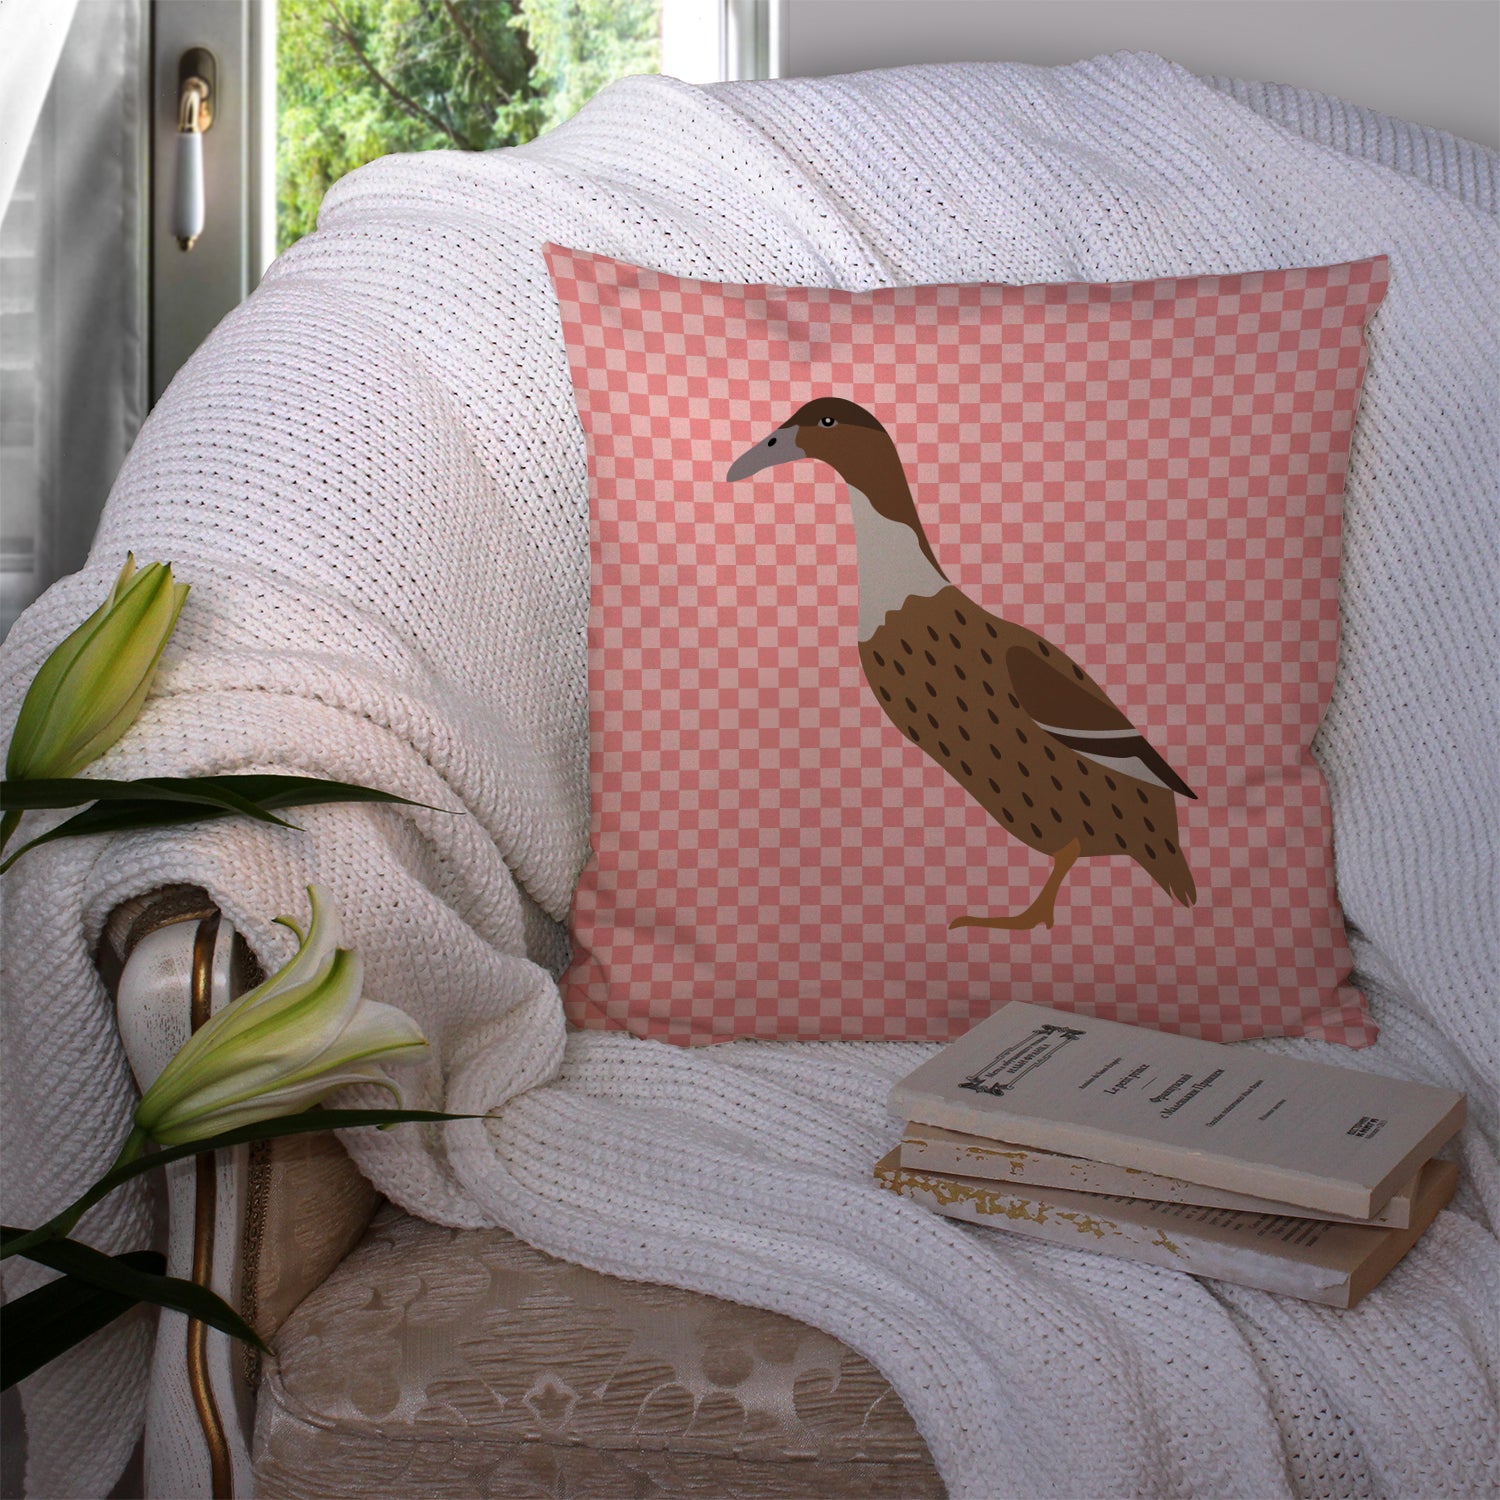 Dutch Hook Bill Duck Pink Check Fabric Decorative Pillow BB7861PW1414 - the-store.com